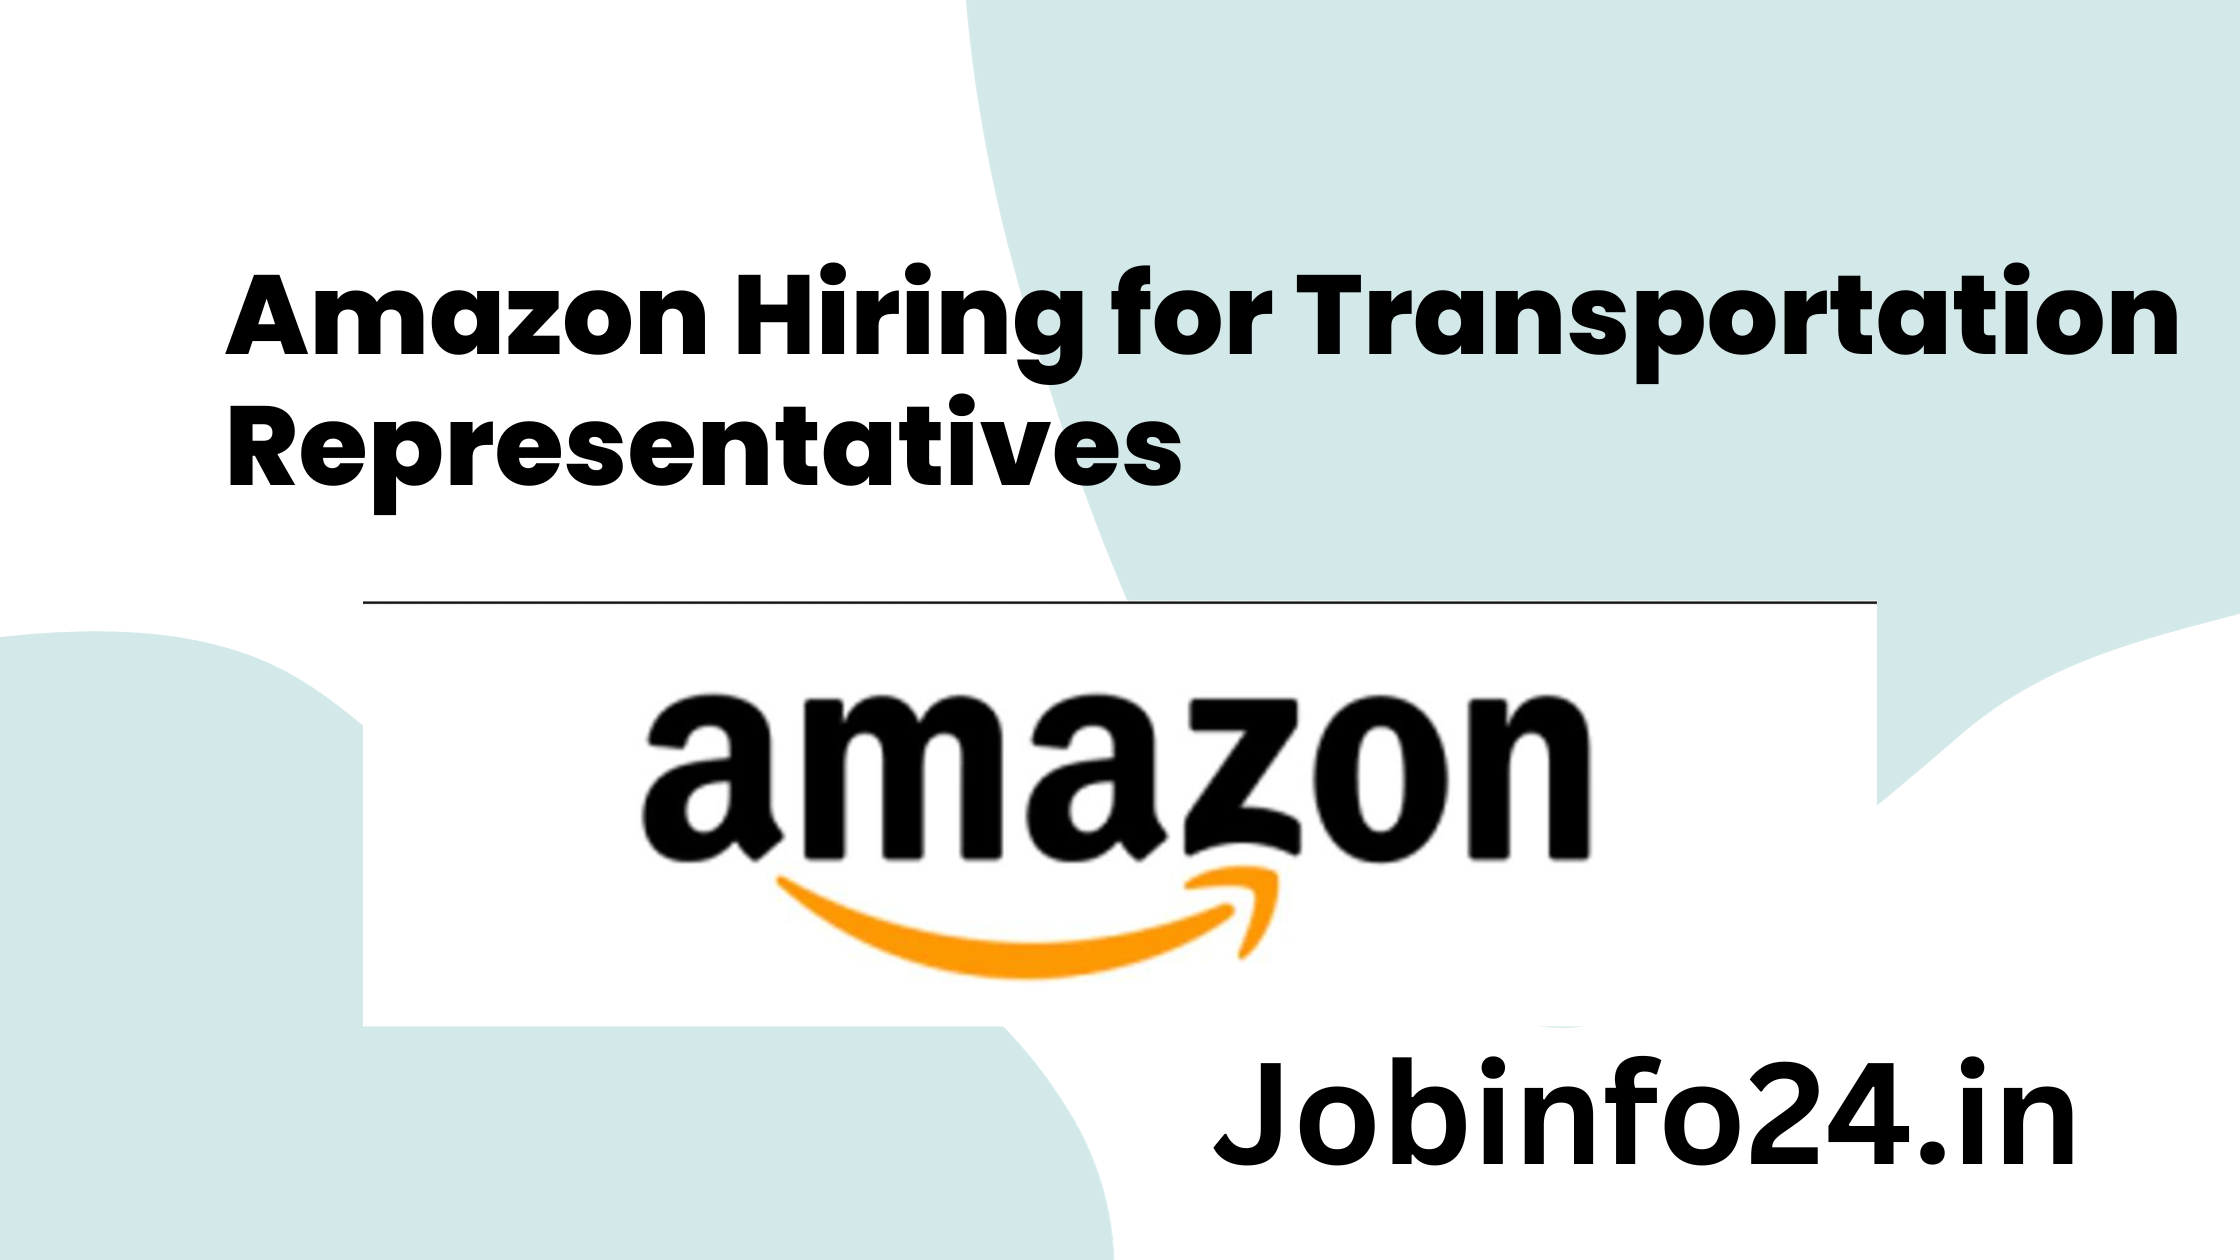 Amazon Hiring for Transportation Representatives